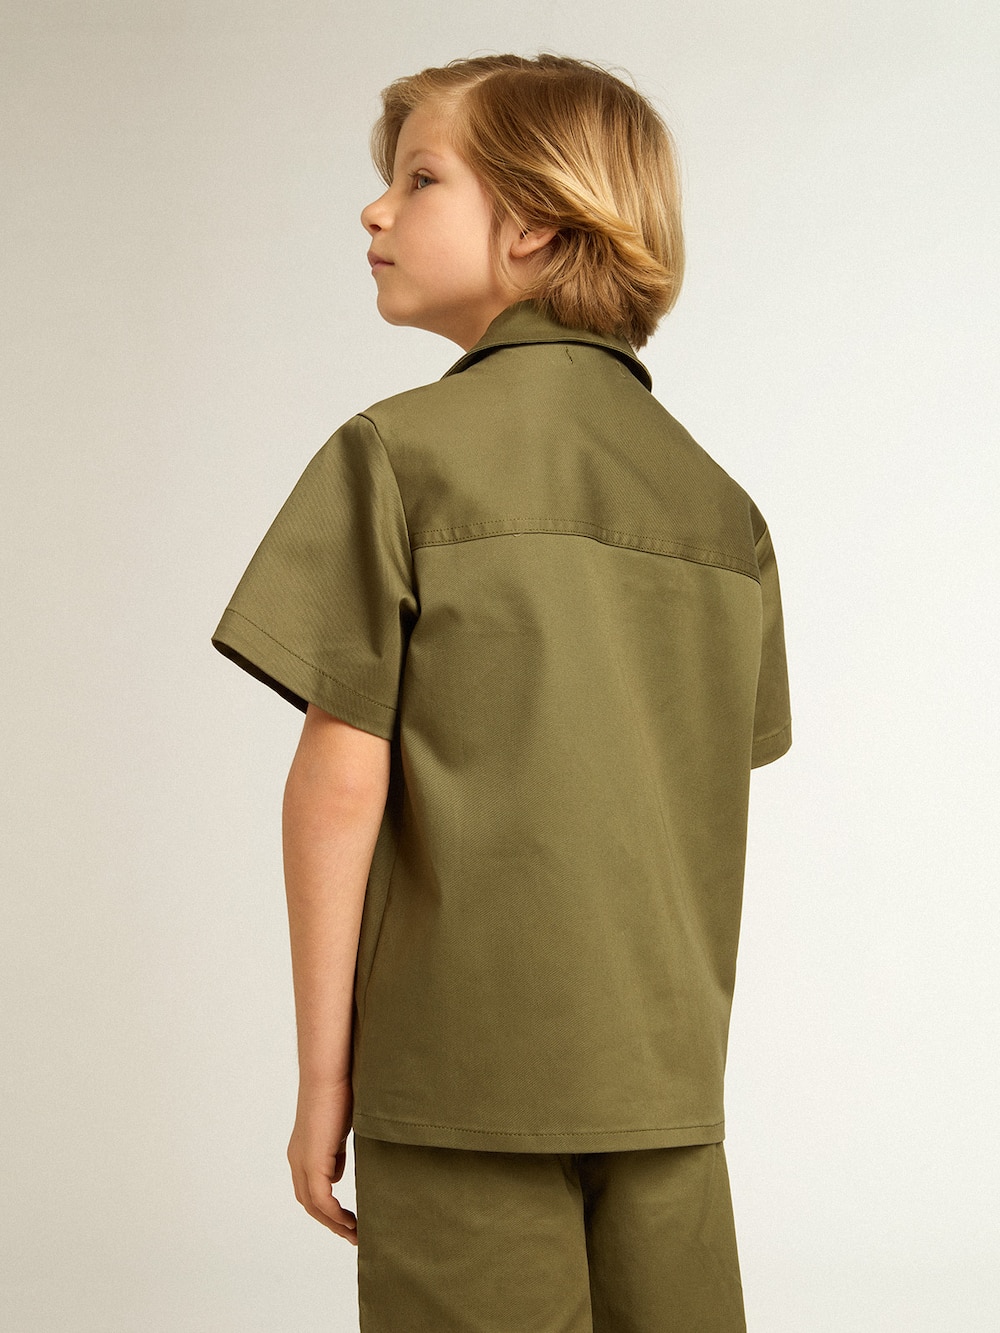 Golden Goose - Camisa color verde militar de niño in 